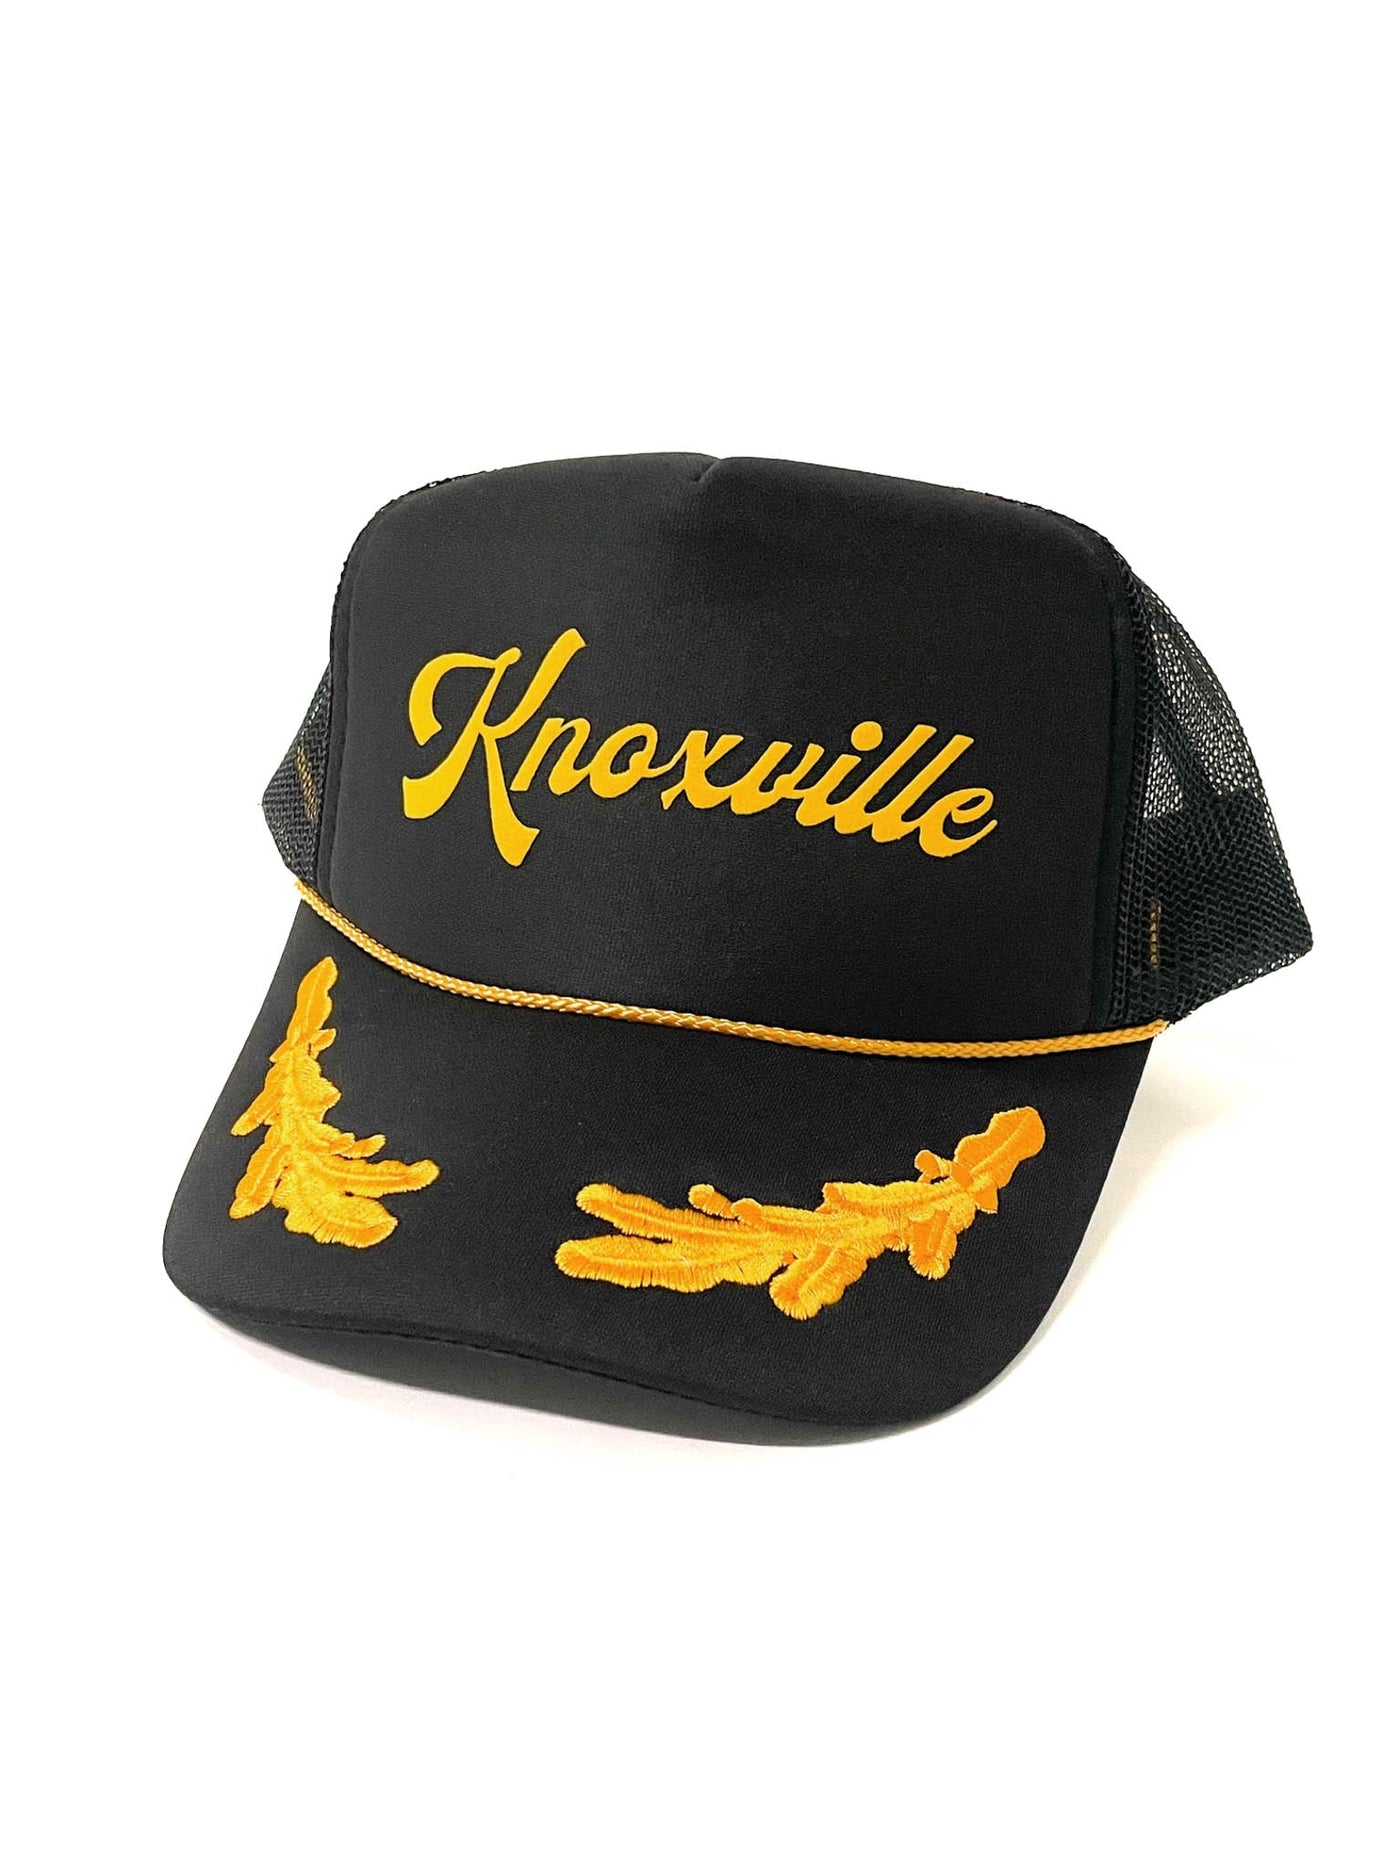 Knoxville Trucker Hat